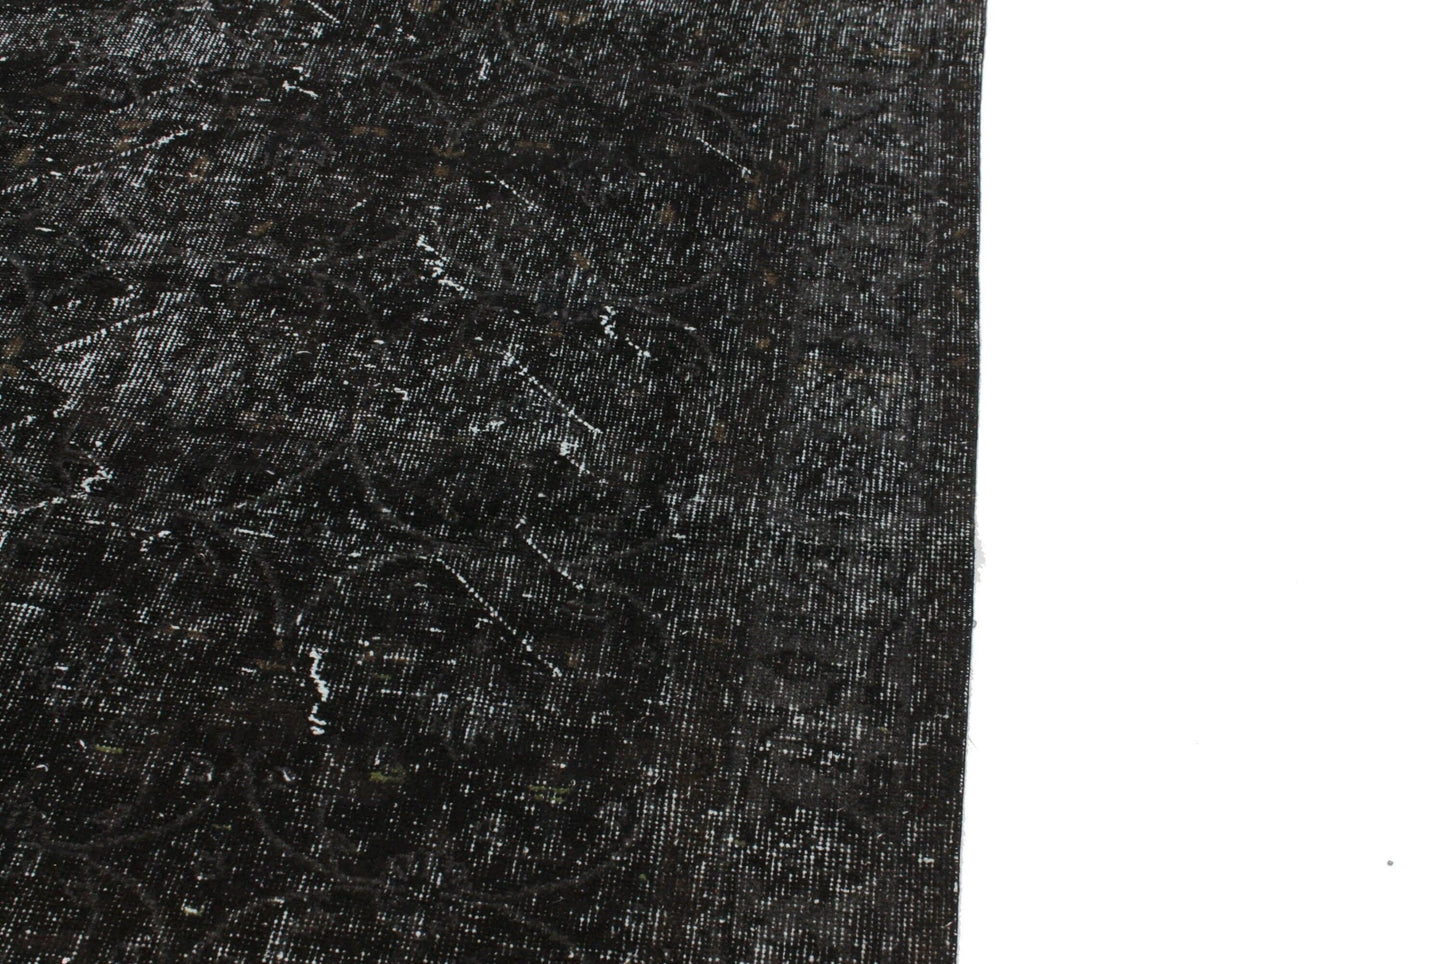 5x9 Black Vintage Turkish Carpet Rug ,Area Wool Handmade Carpet Rug, Living Room, Contemporary, Modern Rug 3153